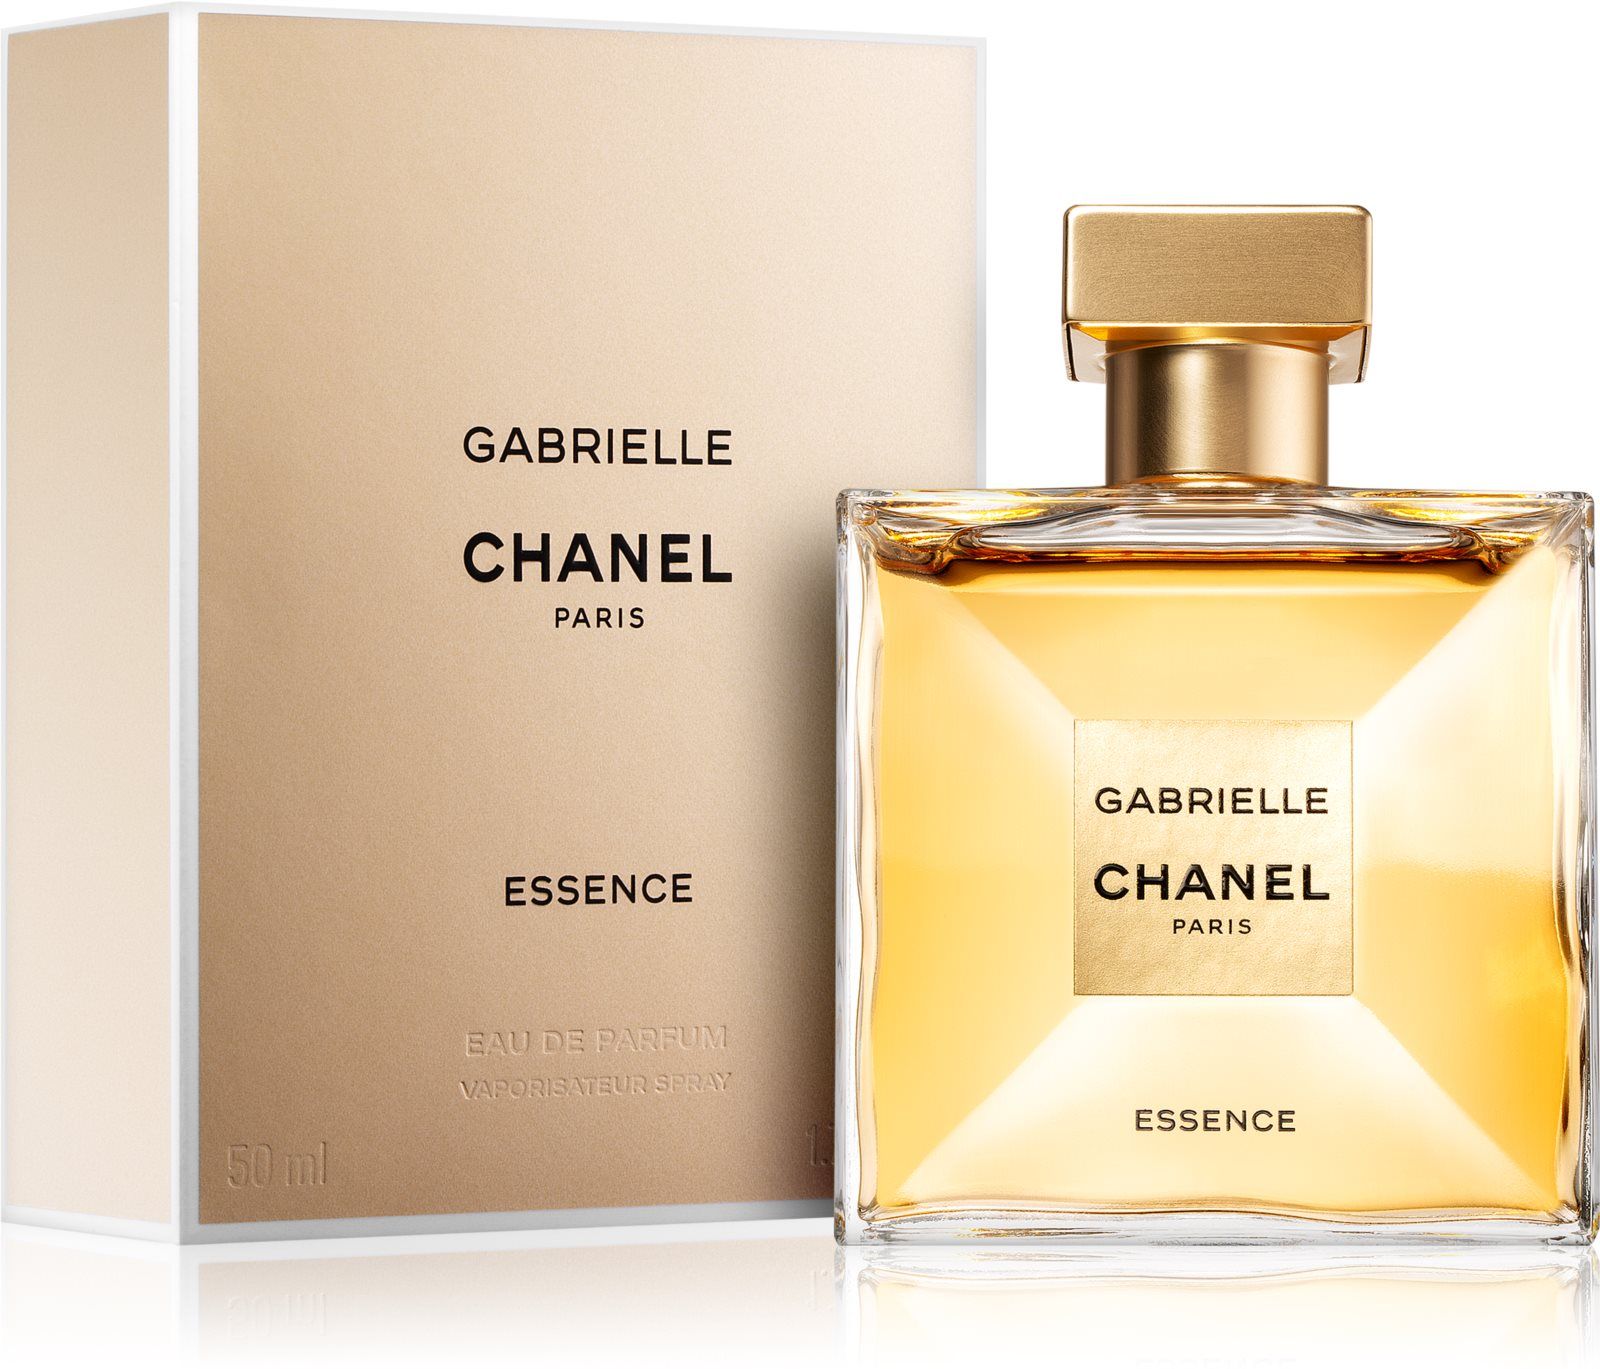 Chanel Gabrielle парфюмерная вода 35 мл. Chanel Gabrielle помада. Коко Шанель Габриэль цена в Дубае. Essence chanel